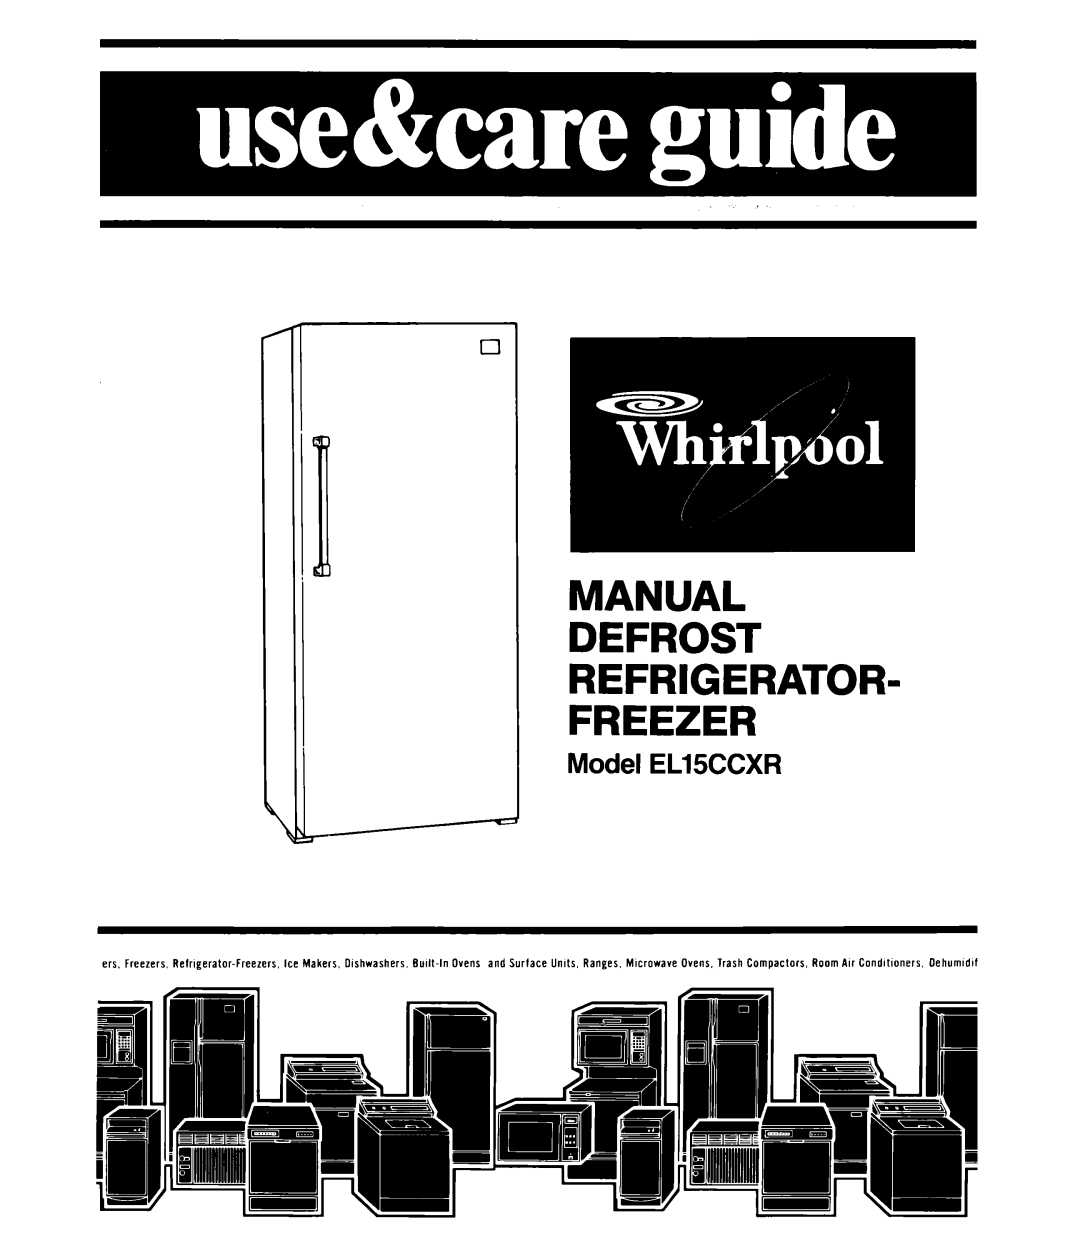 Whirlpool ELl5CCXR manual Manual Defrost Refrigerator Freezer, Model ELlSCCXR 